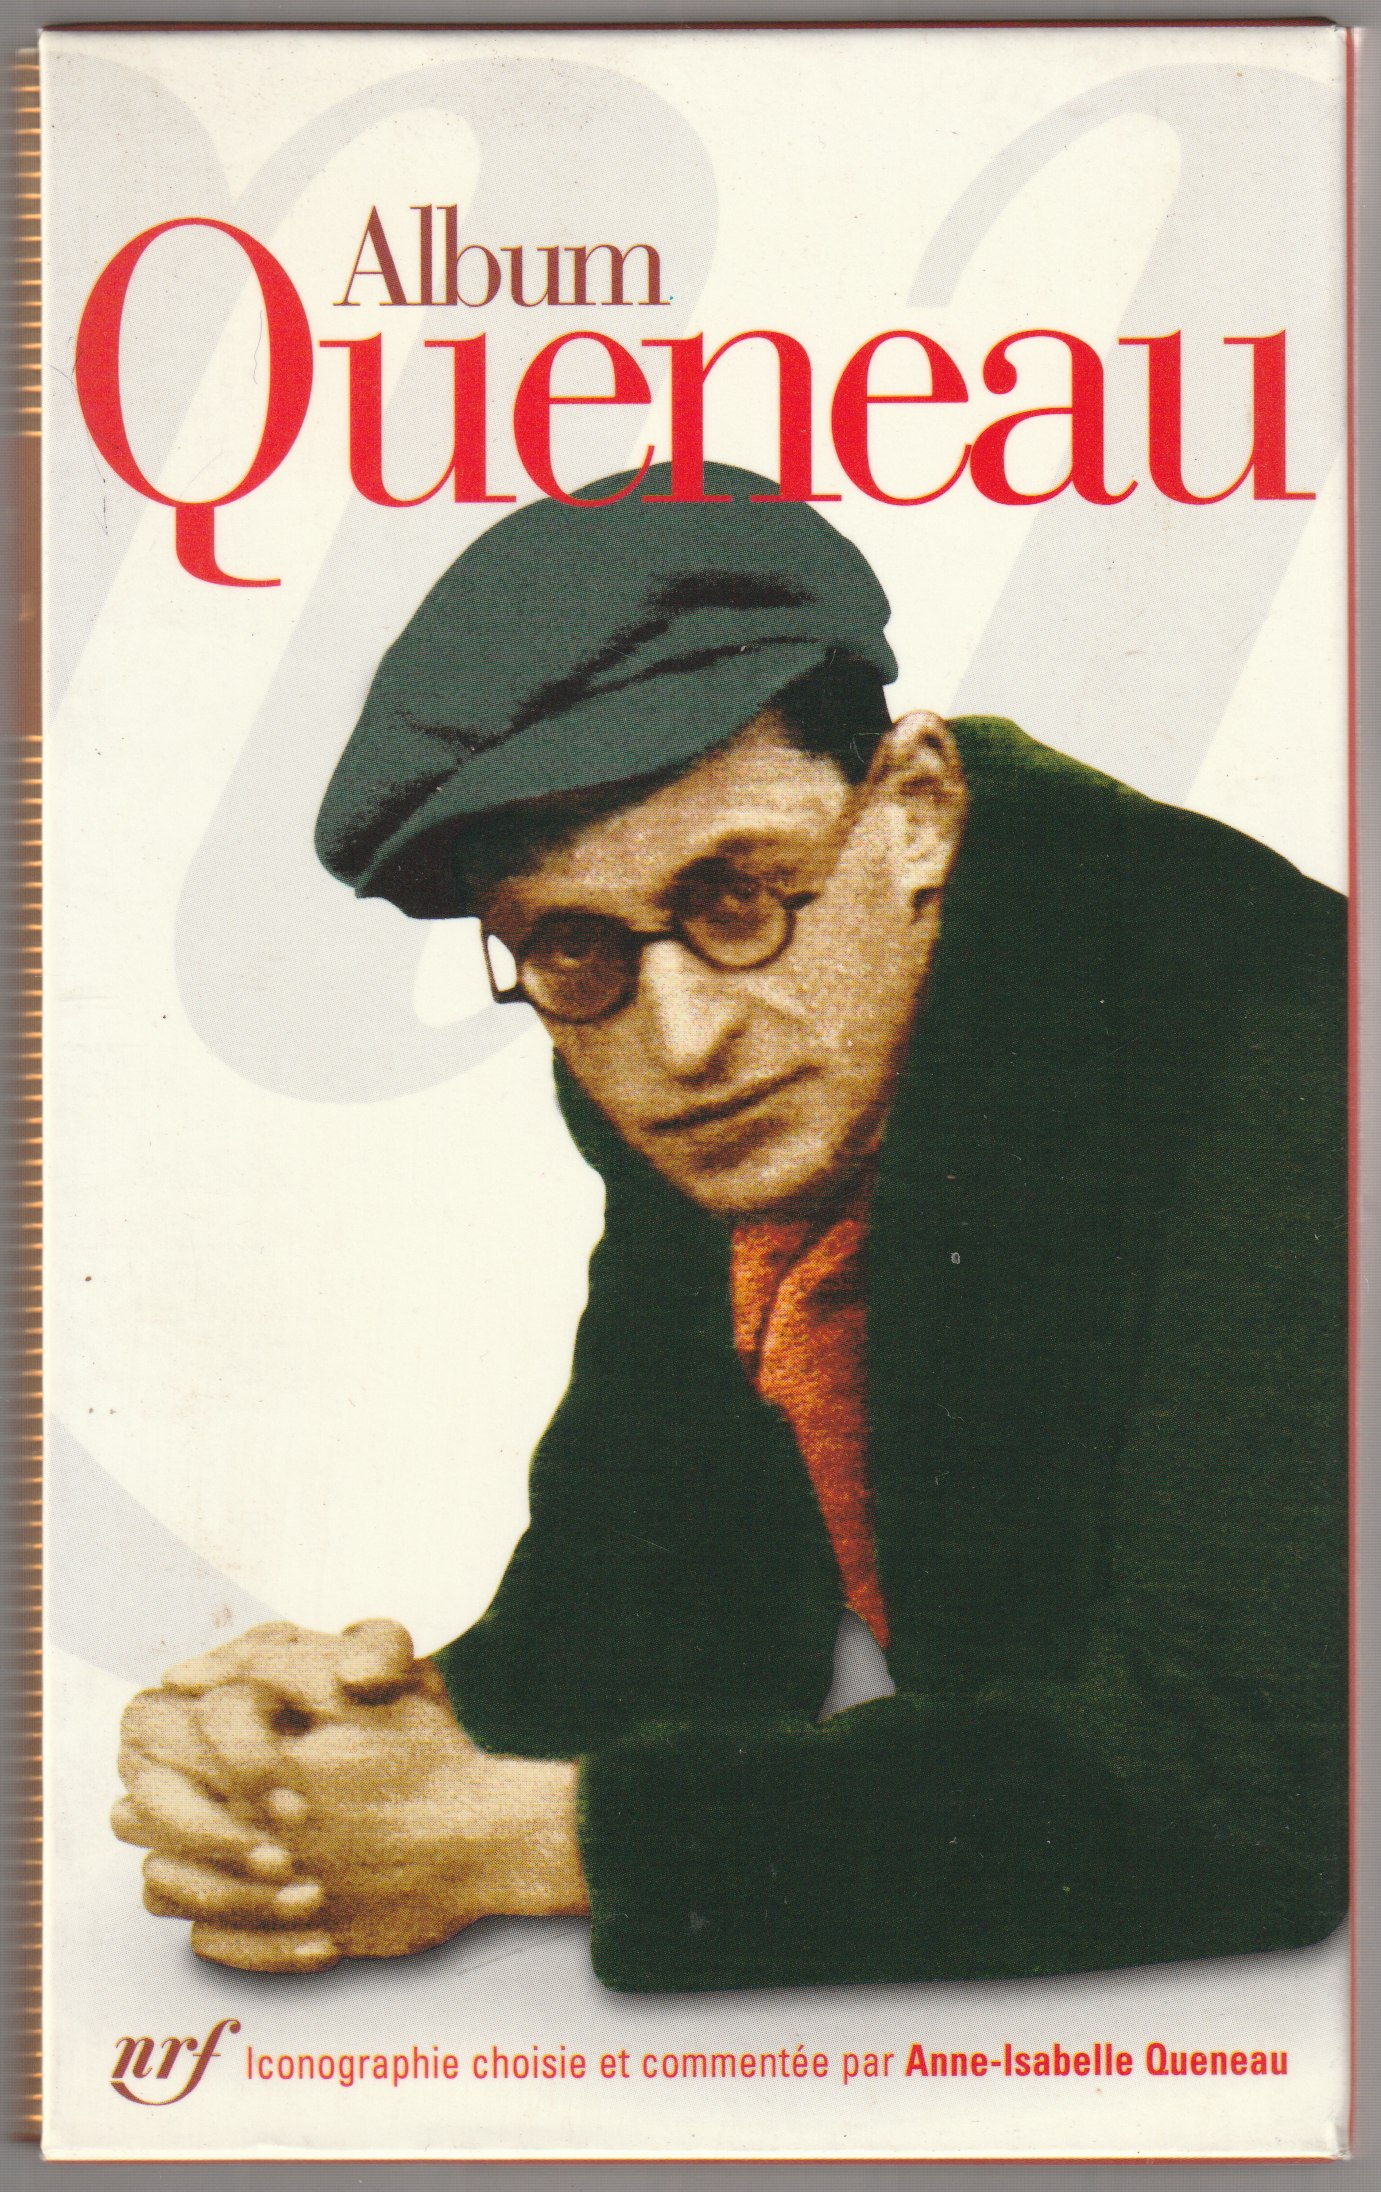 Album Raymond Queneau.